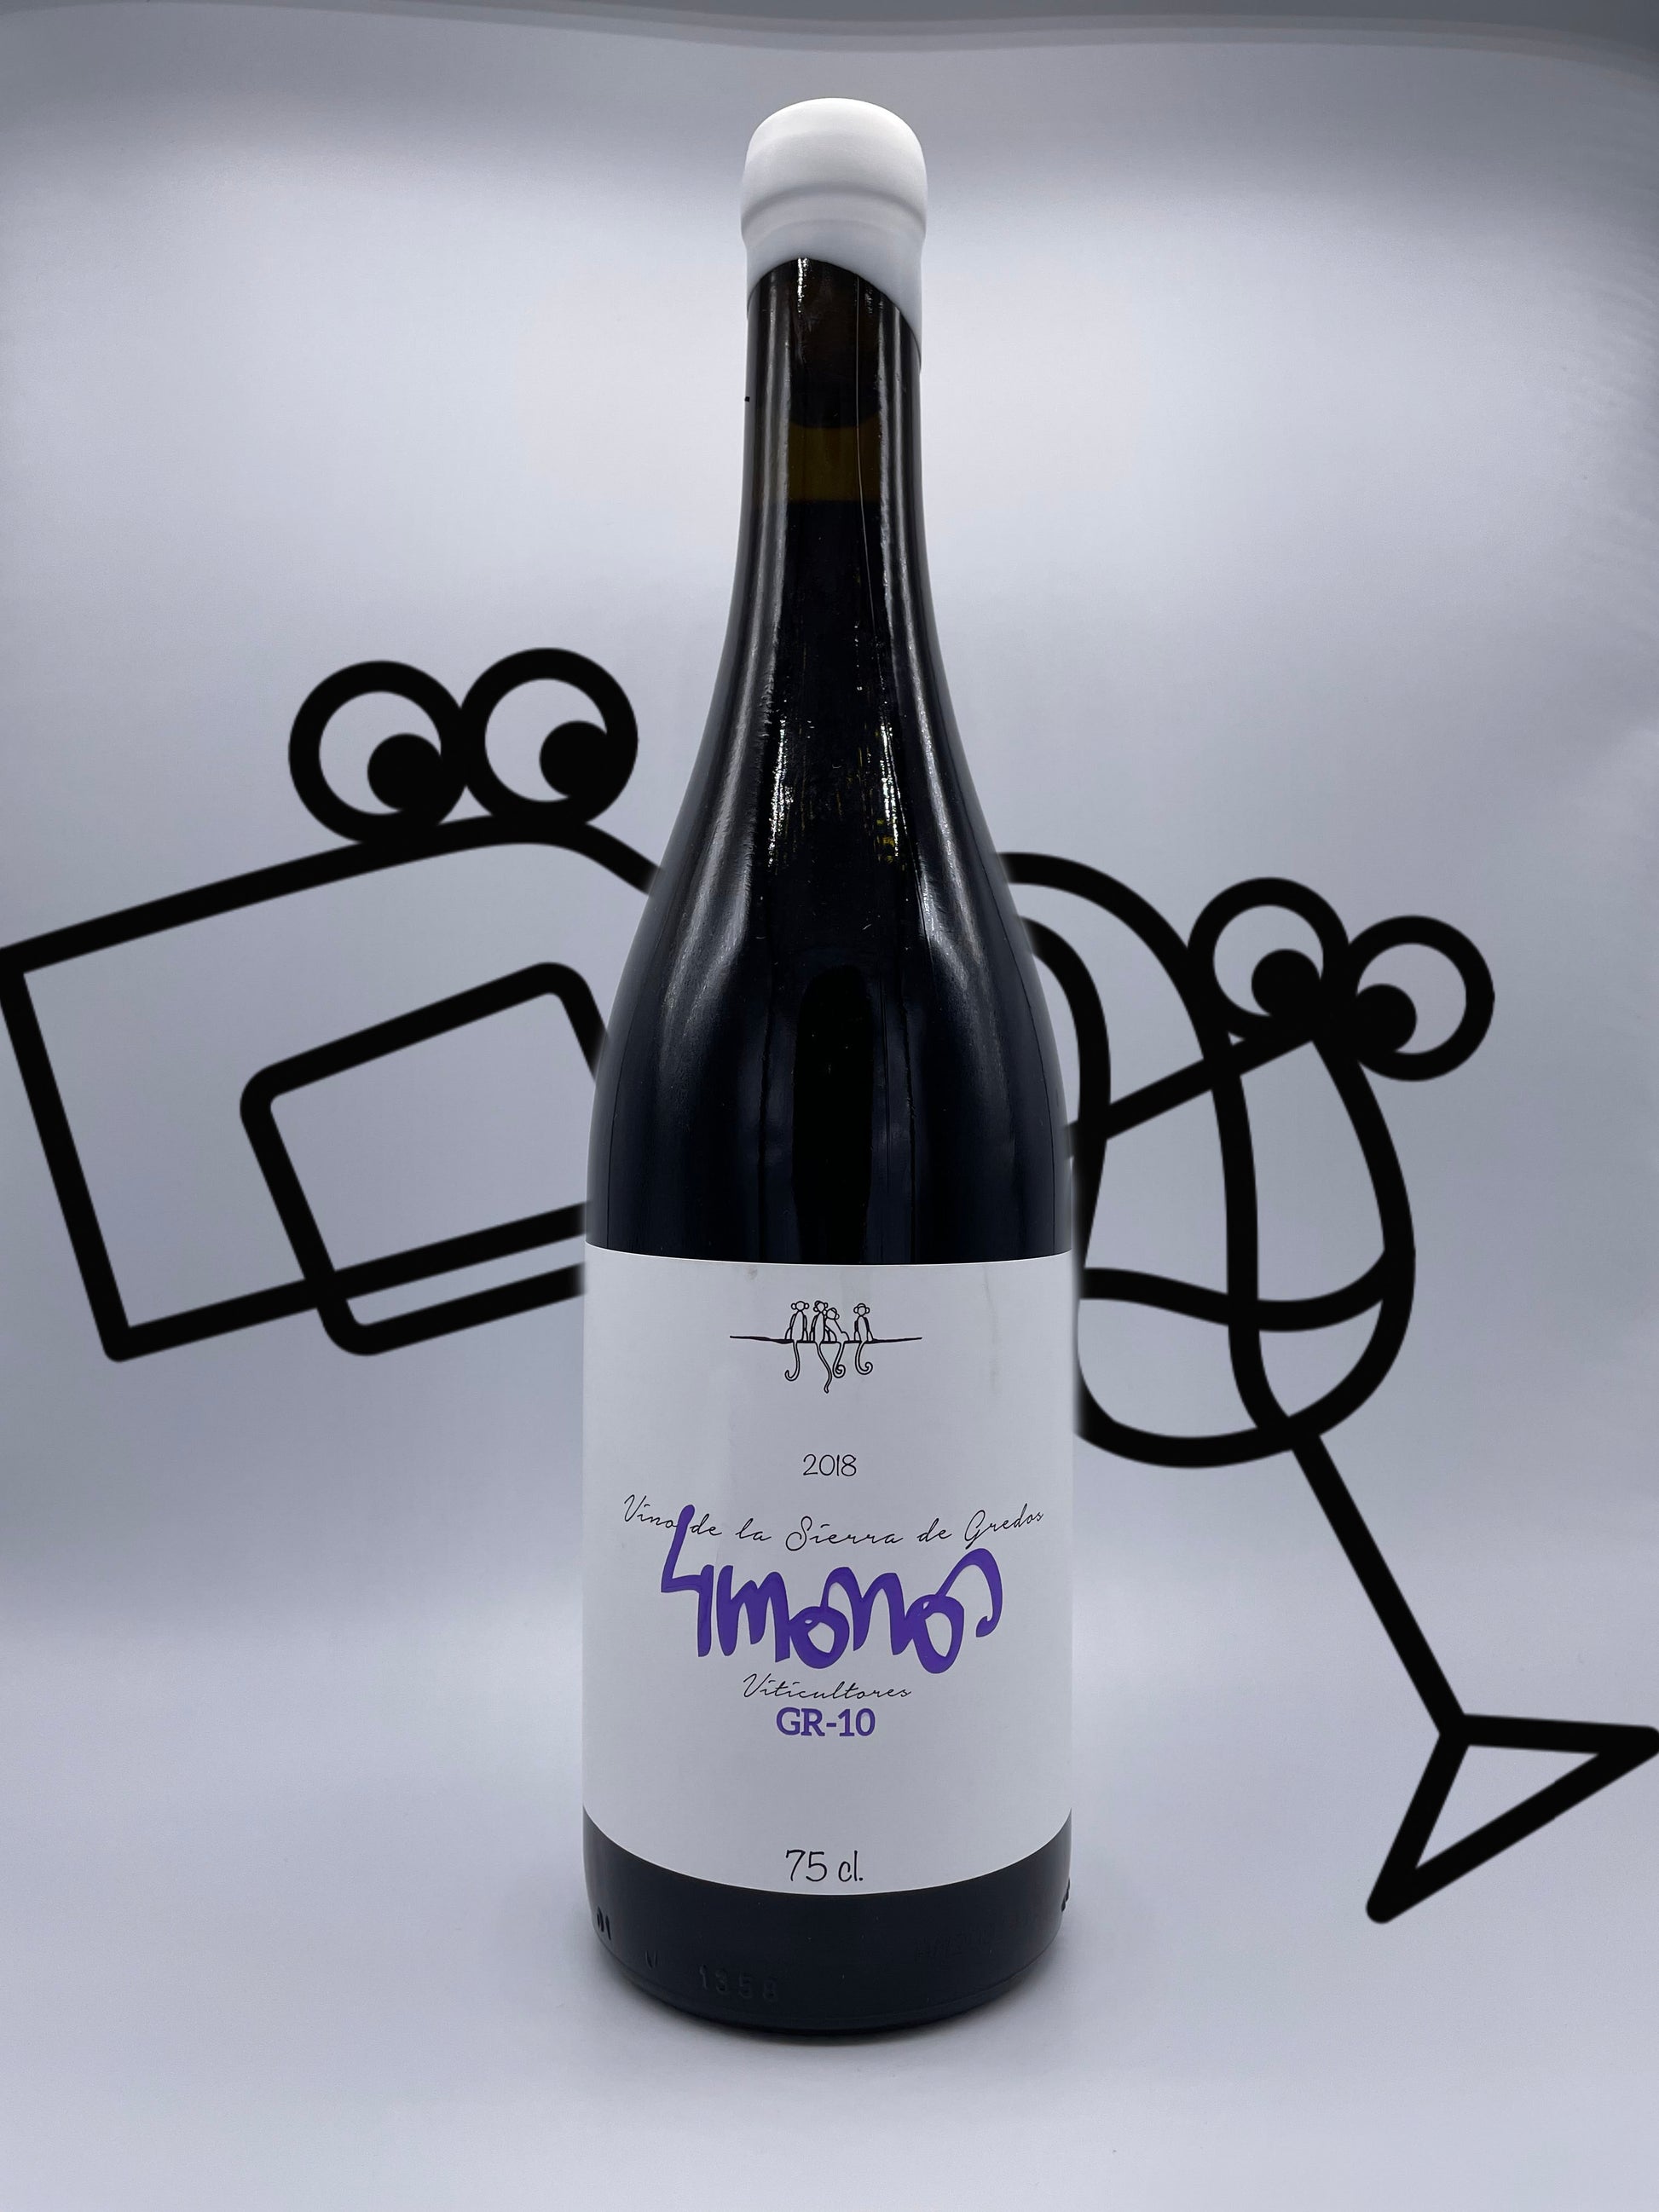 4 Monos 'GR-10' Tinto Williston Park Wines